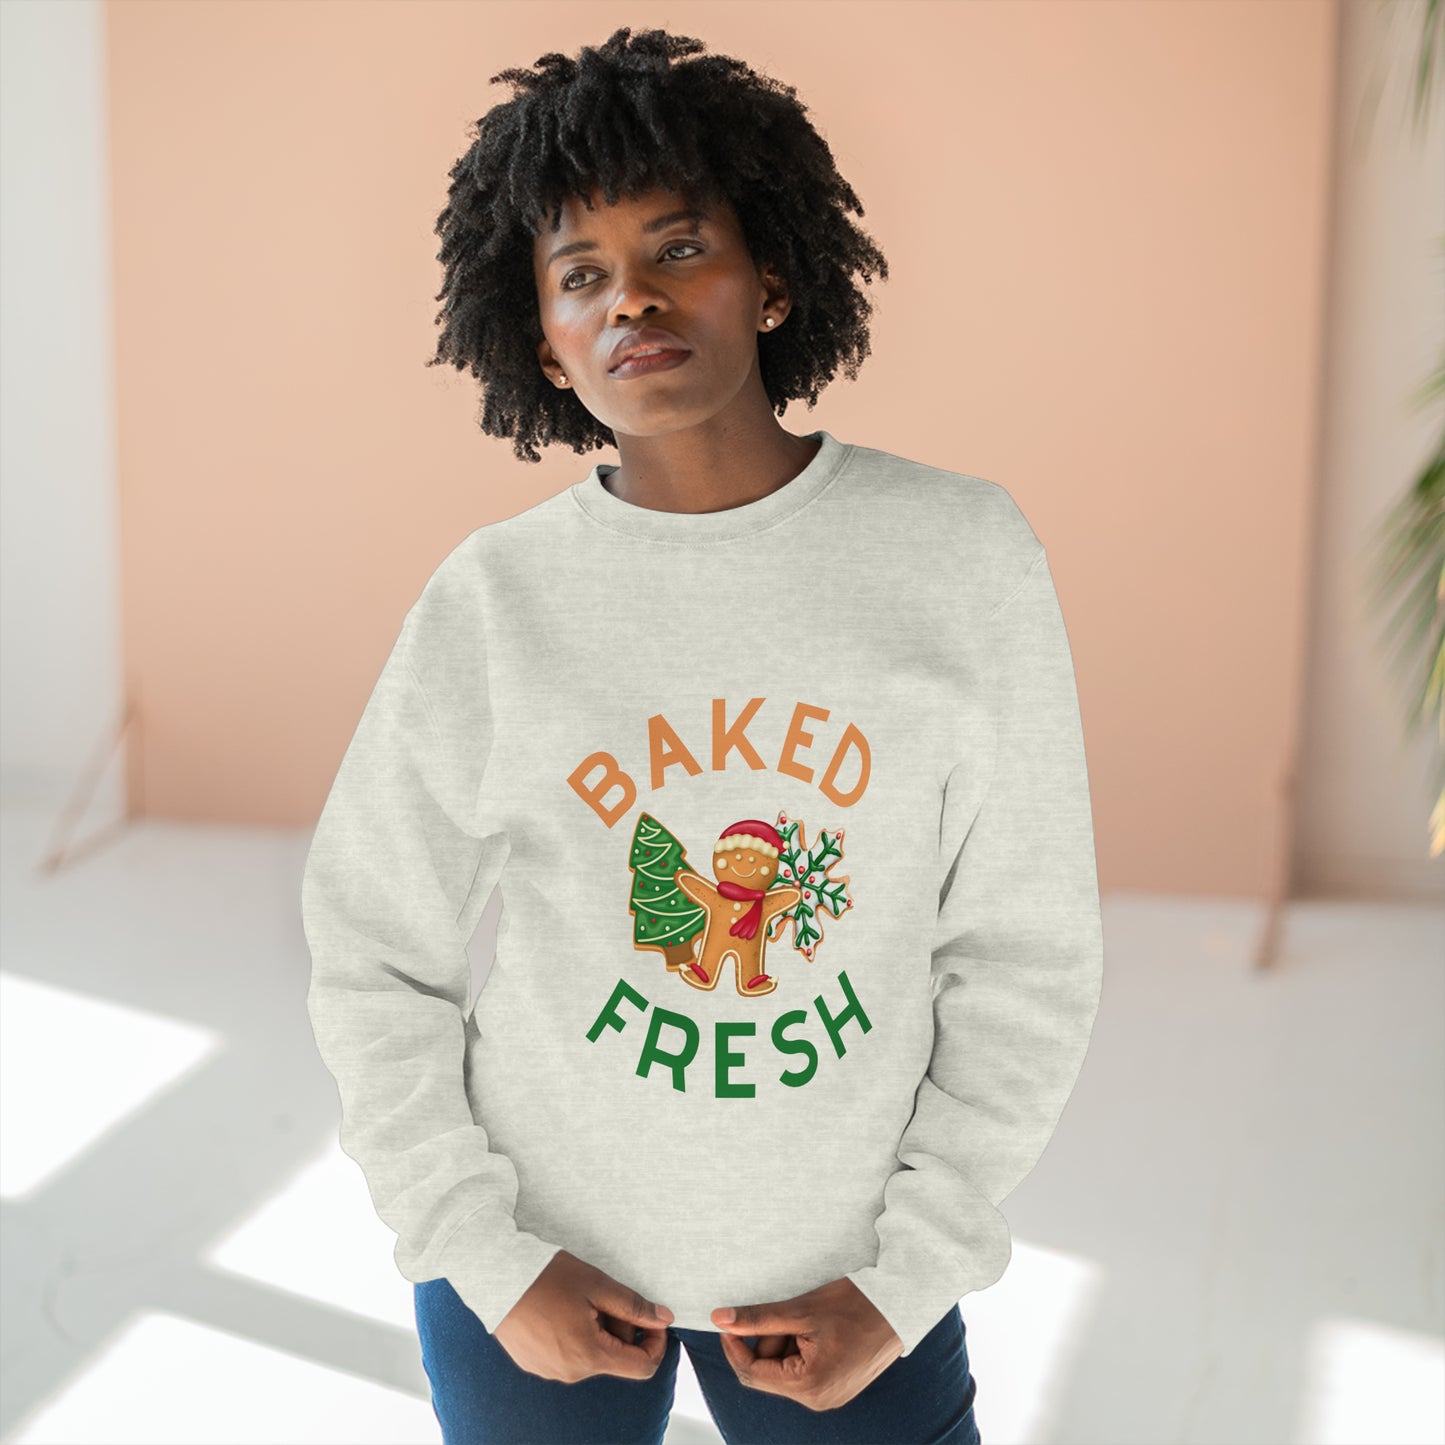 Baked Fresh - Christmas - Unisex Premium Crewneck Sweatshirt